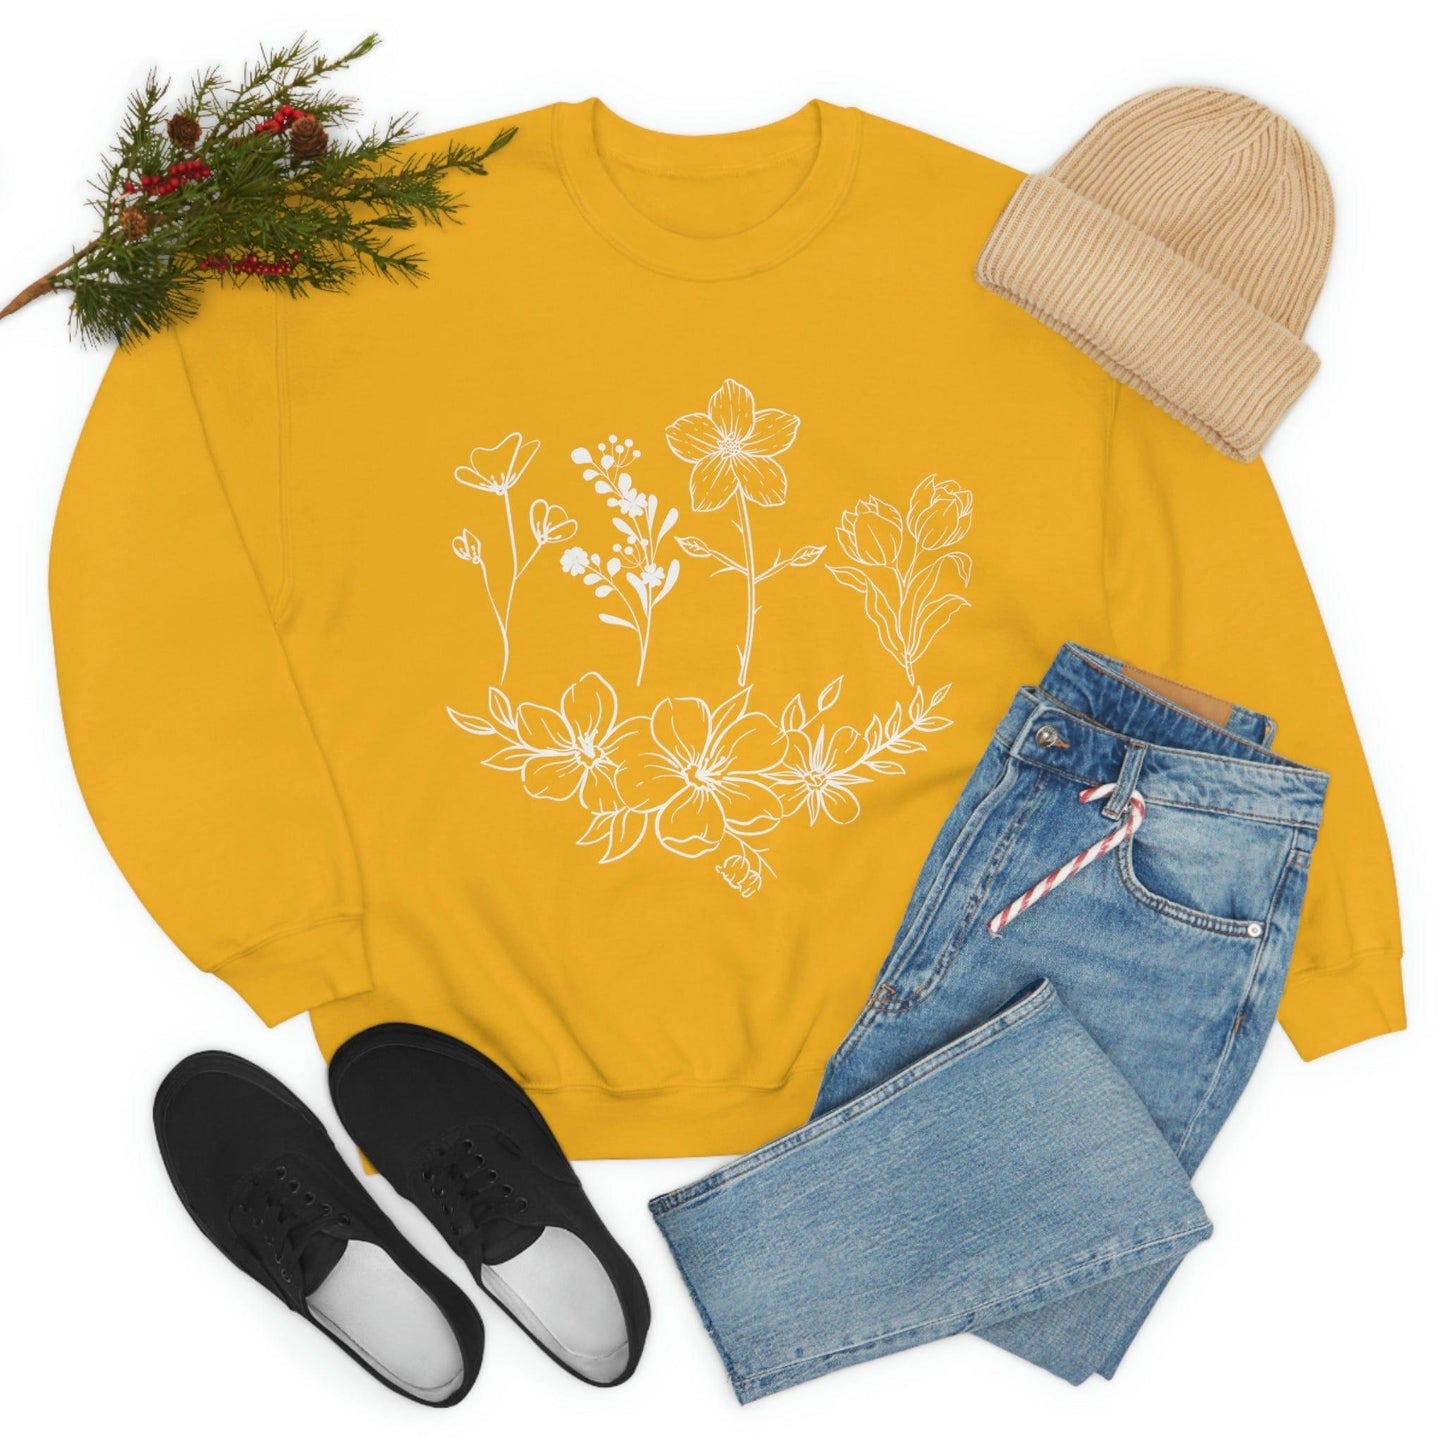 Flower sweatshirt, Vintage Flower Shirt, Vintage Botanical Shirt, plant sweatshirt,